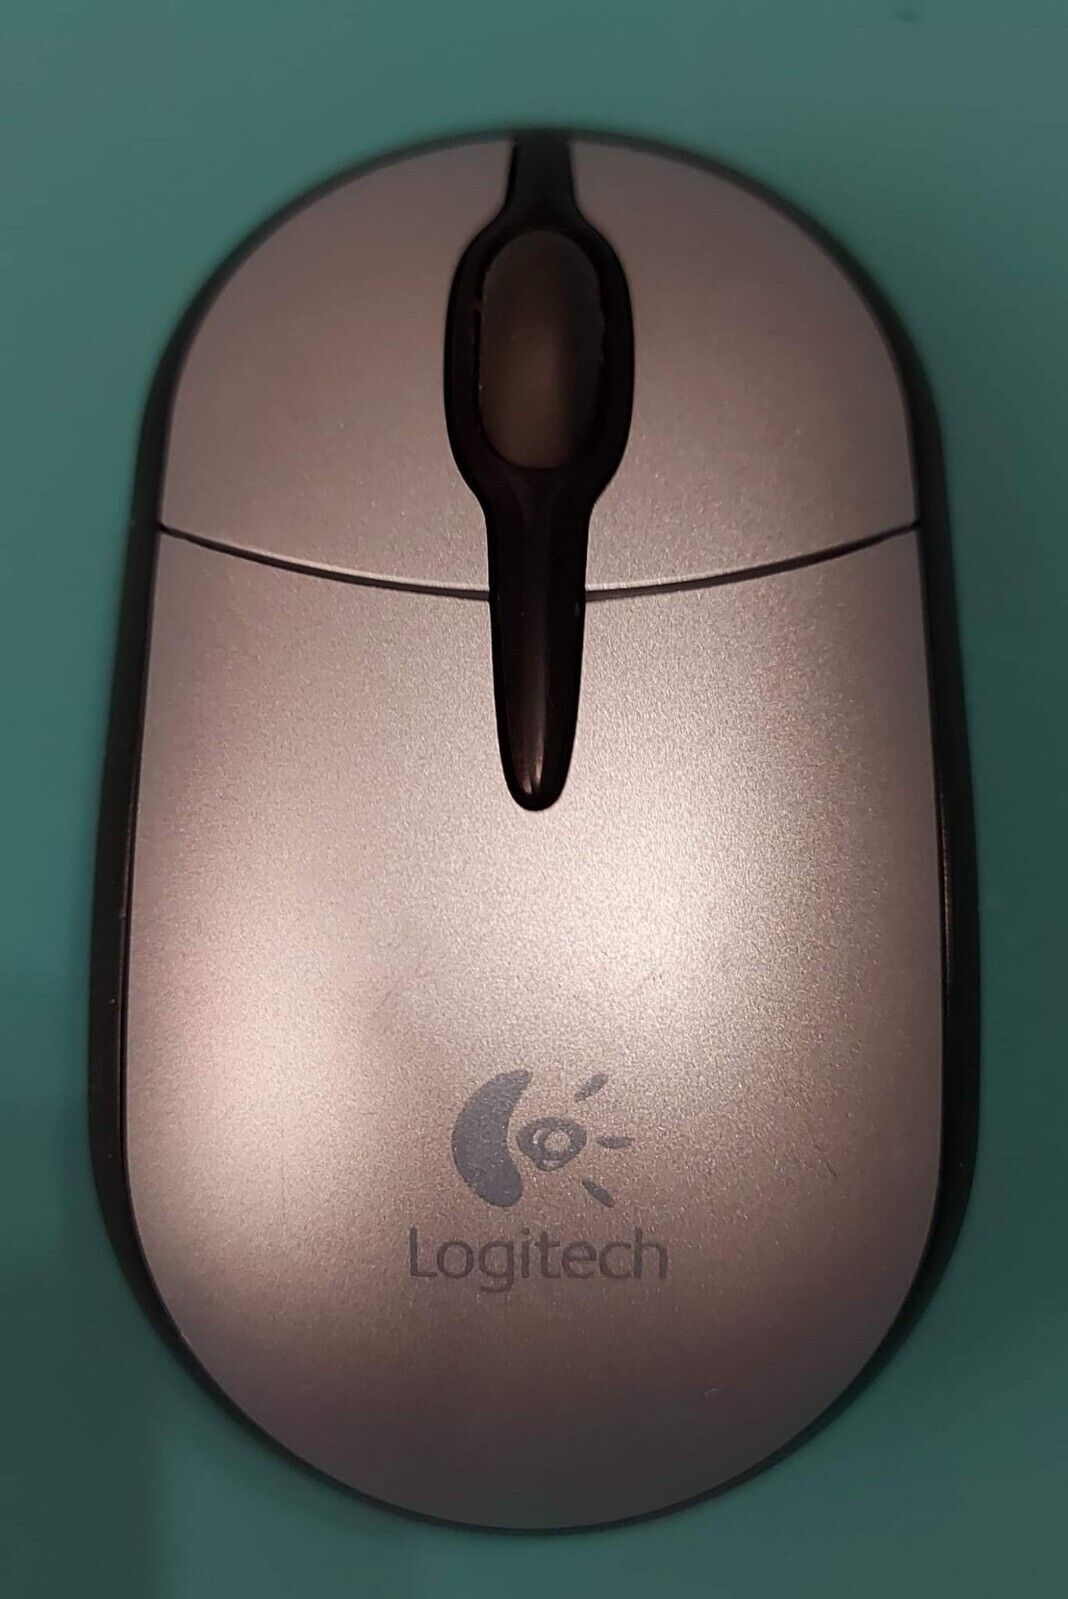 Logitech Notebook Optical Mouse Plus M-UV94 Black Silver 3 Button Laptop *Tested